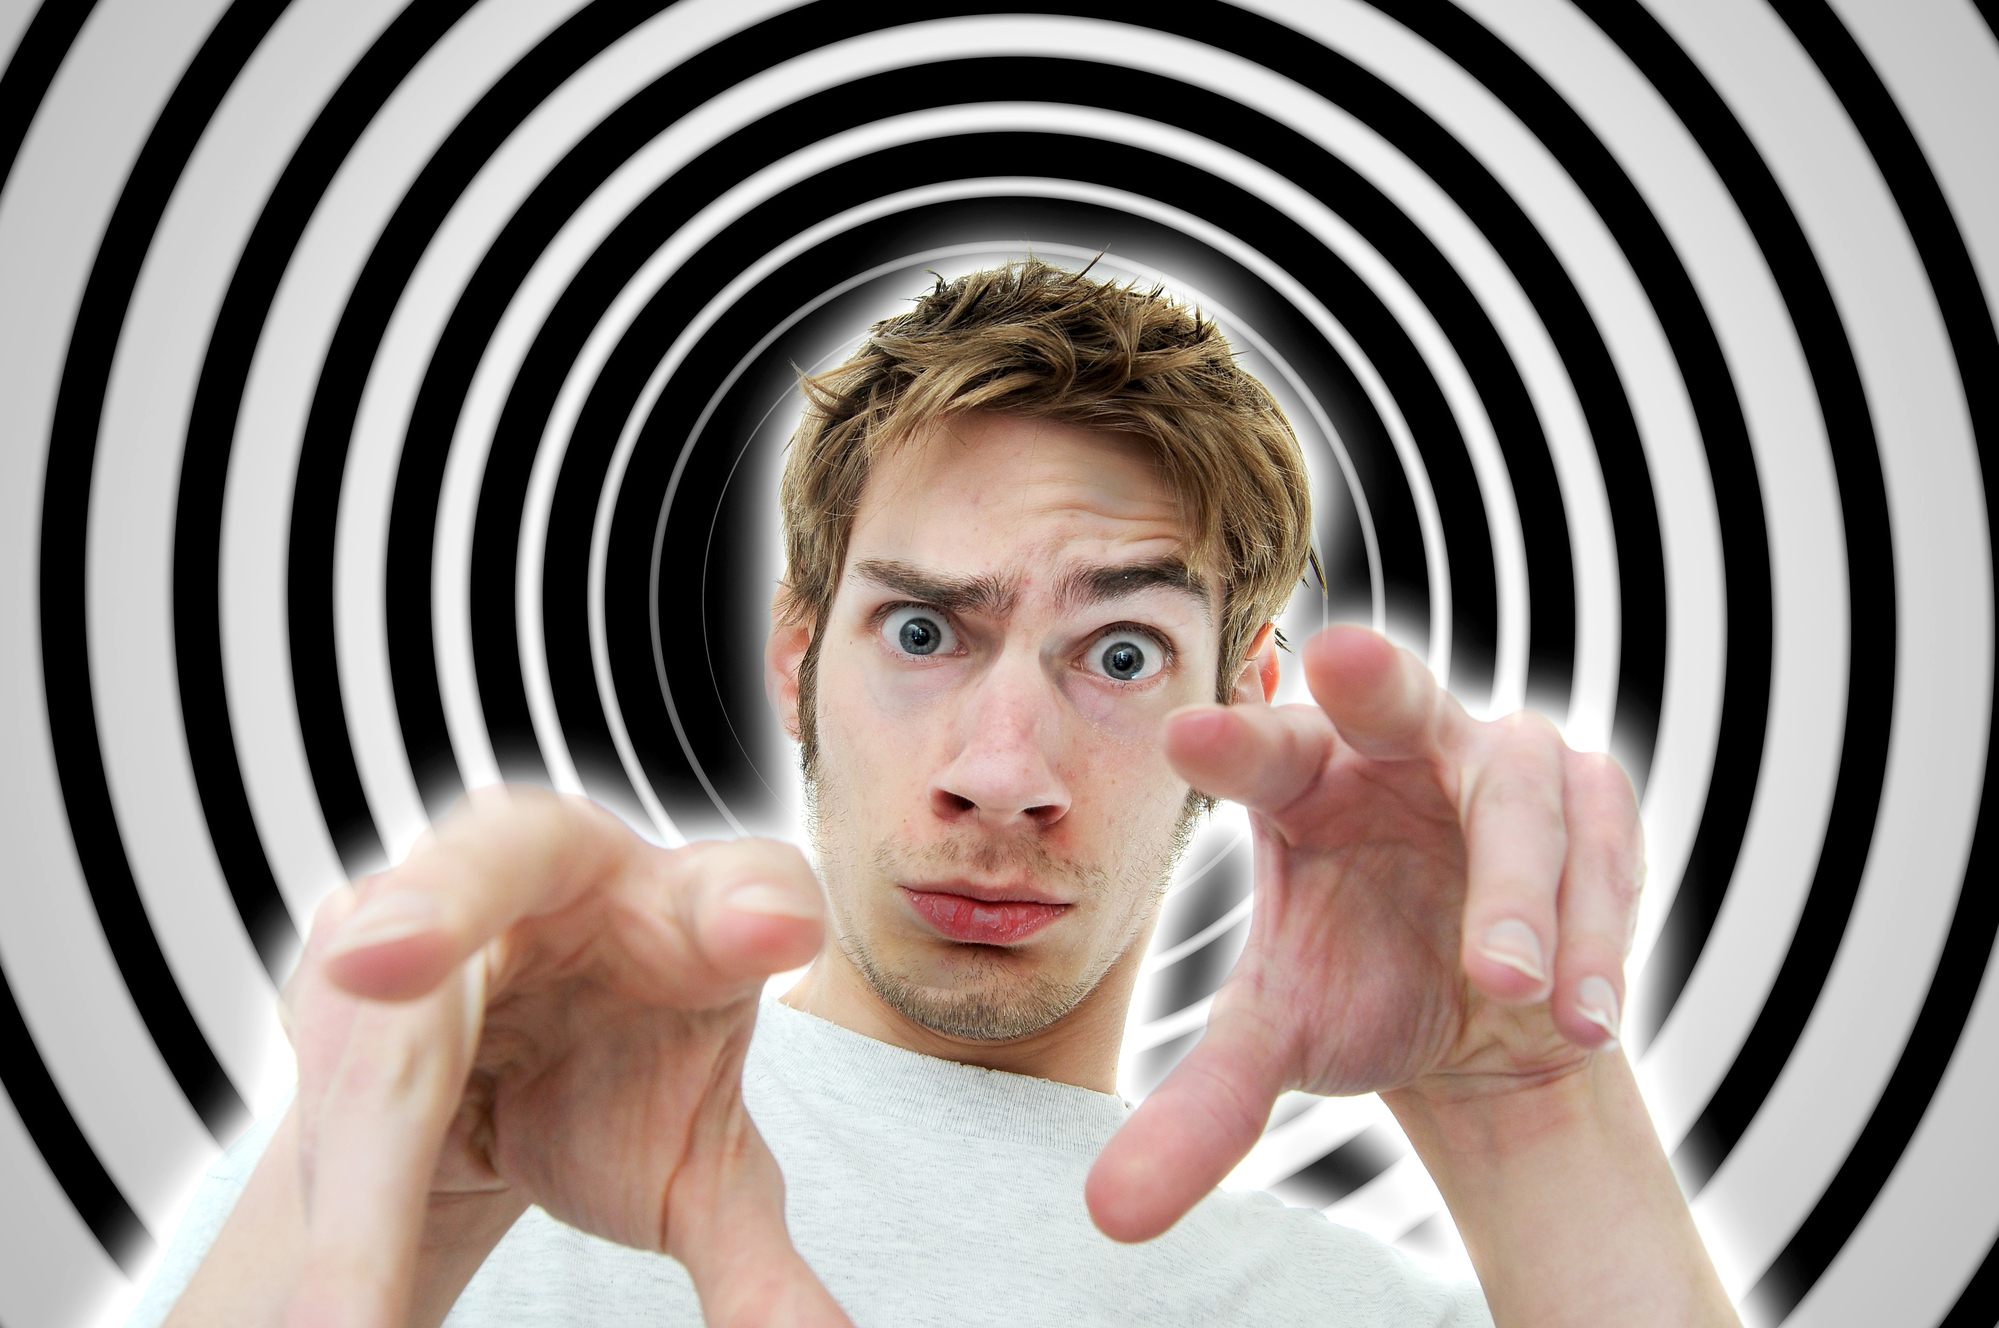 Image of a hypnotist brainwashing the viewer into a deep subconscious subliminal trance using secret mind control tactics.